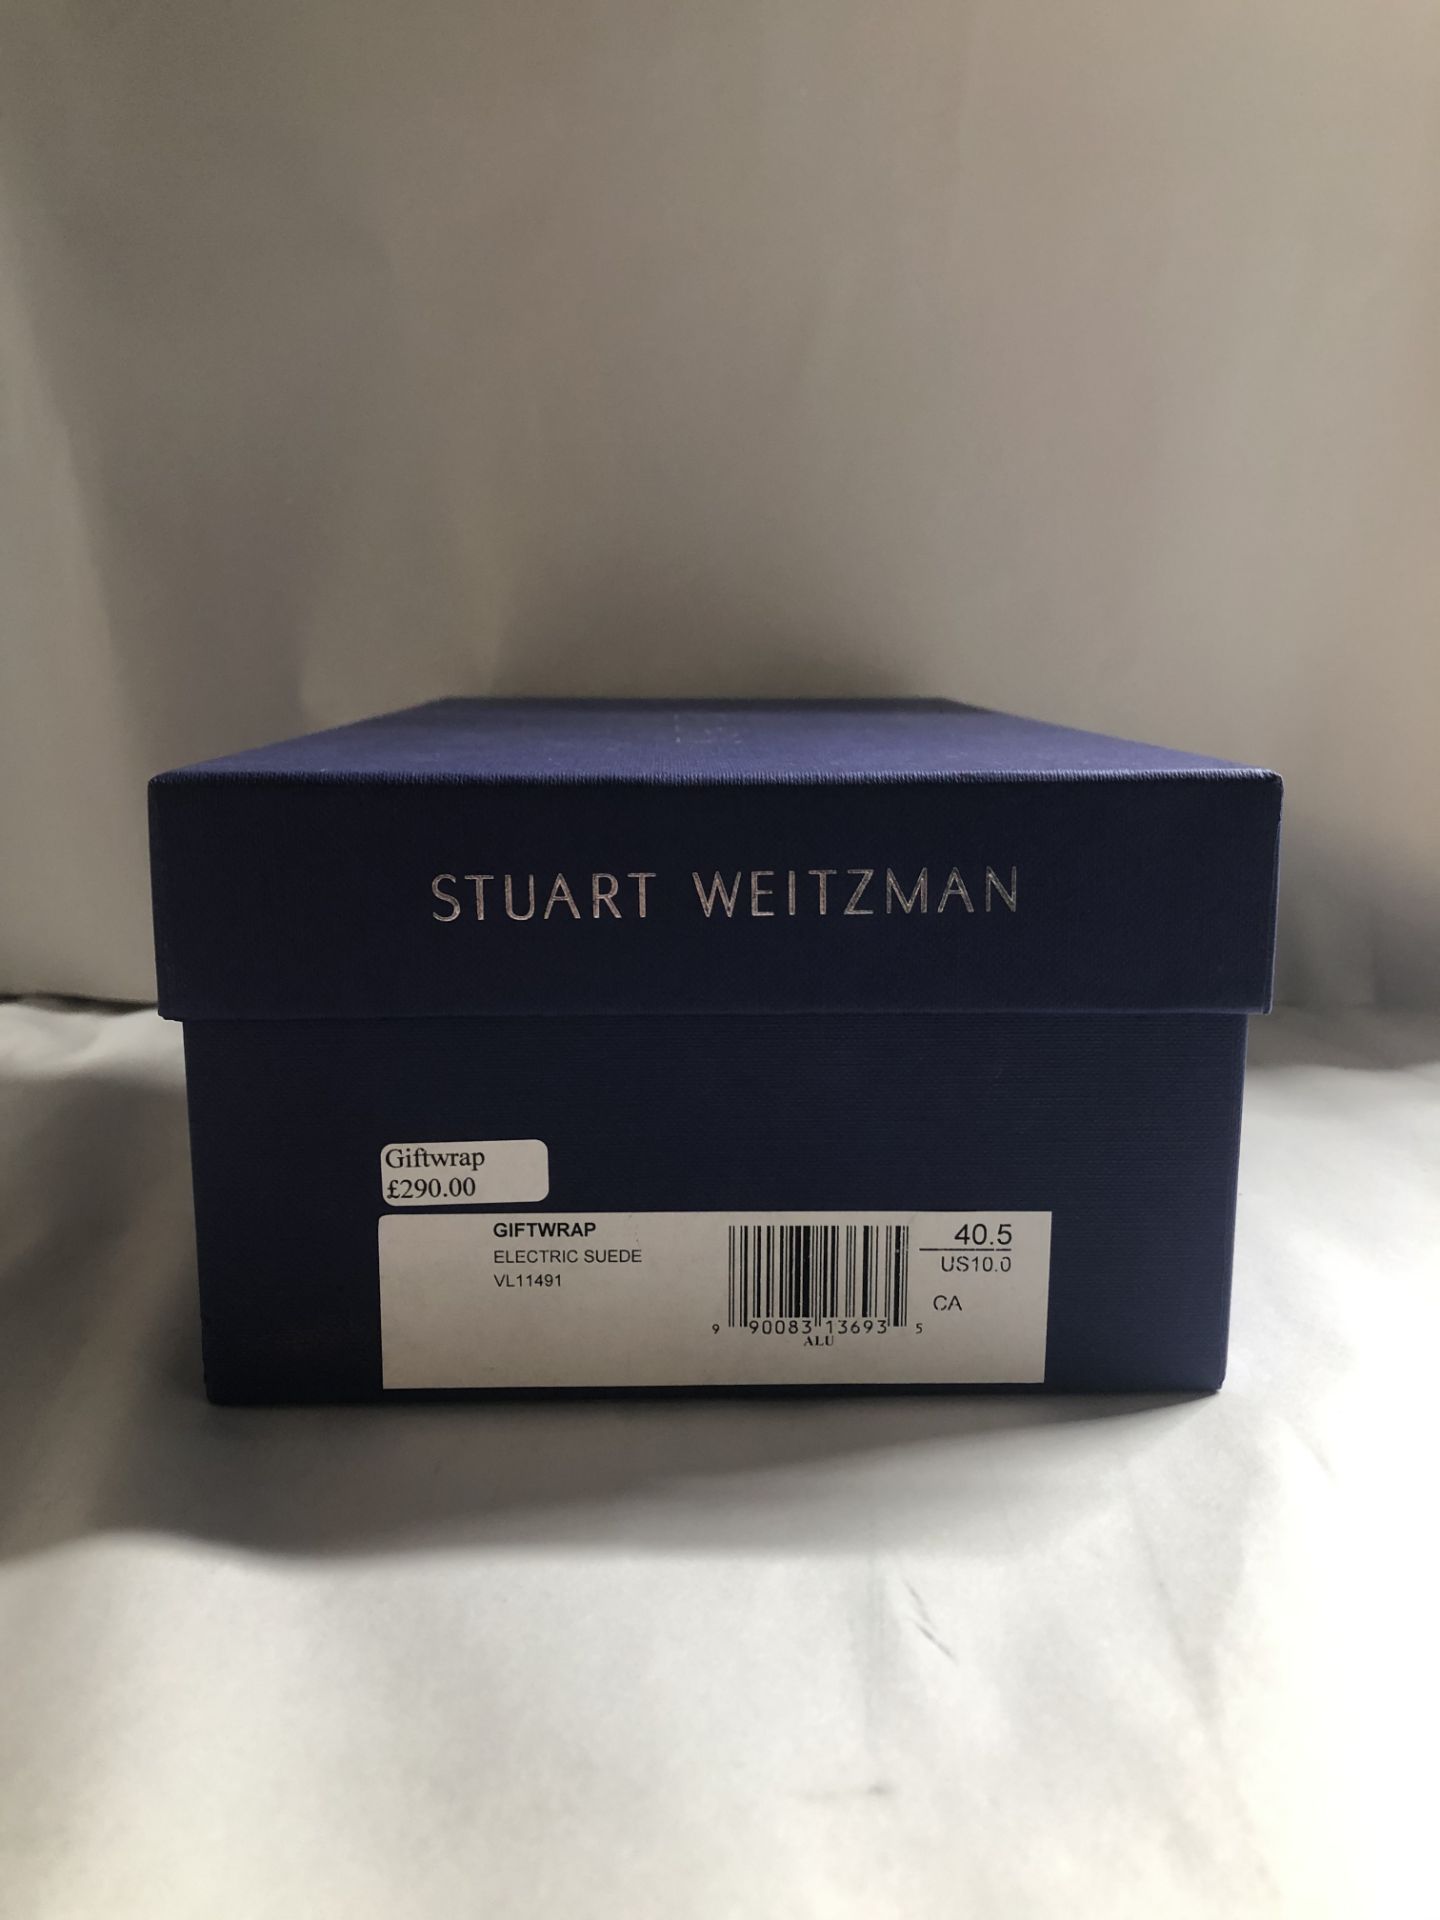 Stuart Weitzman Giftwrap Eletric Suede Heels. EU 40.5 RRP £290.00 - Image 2 of 2